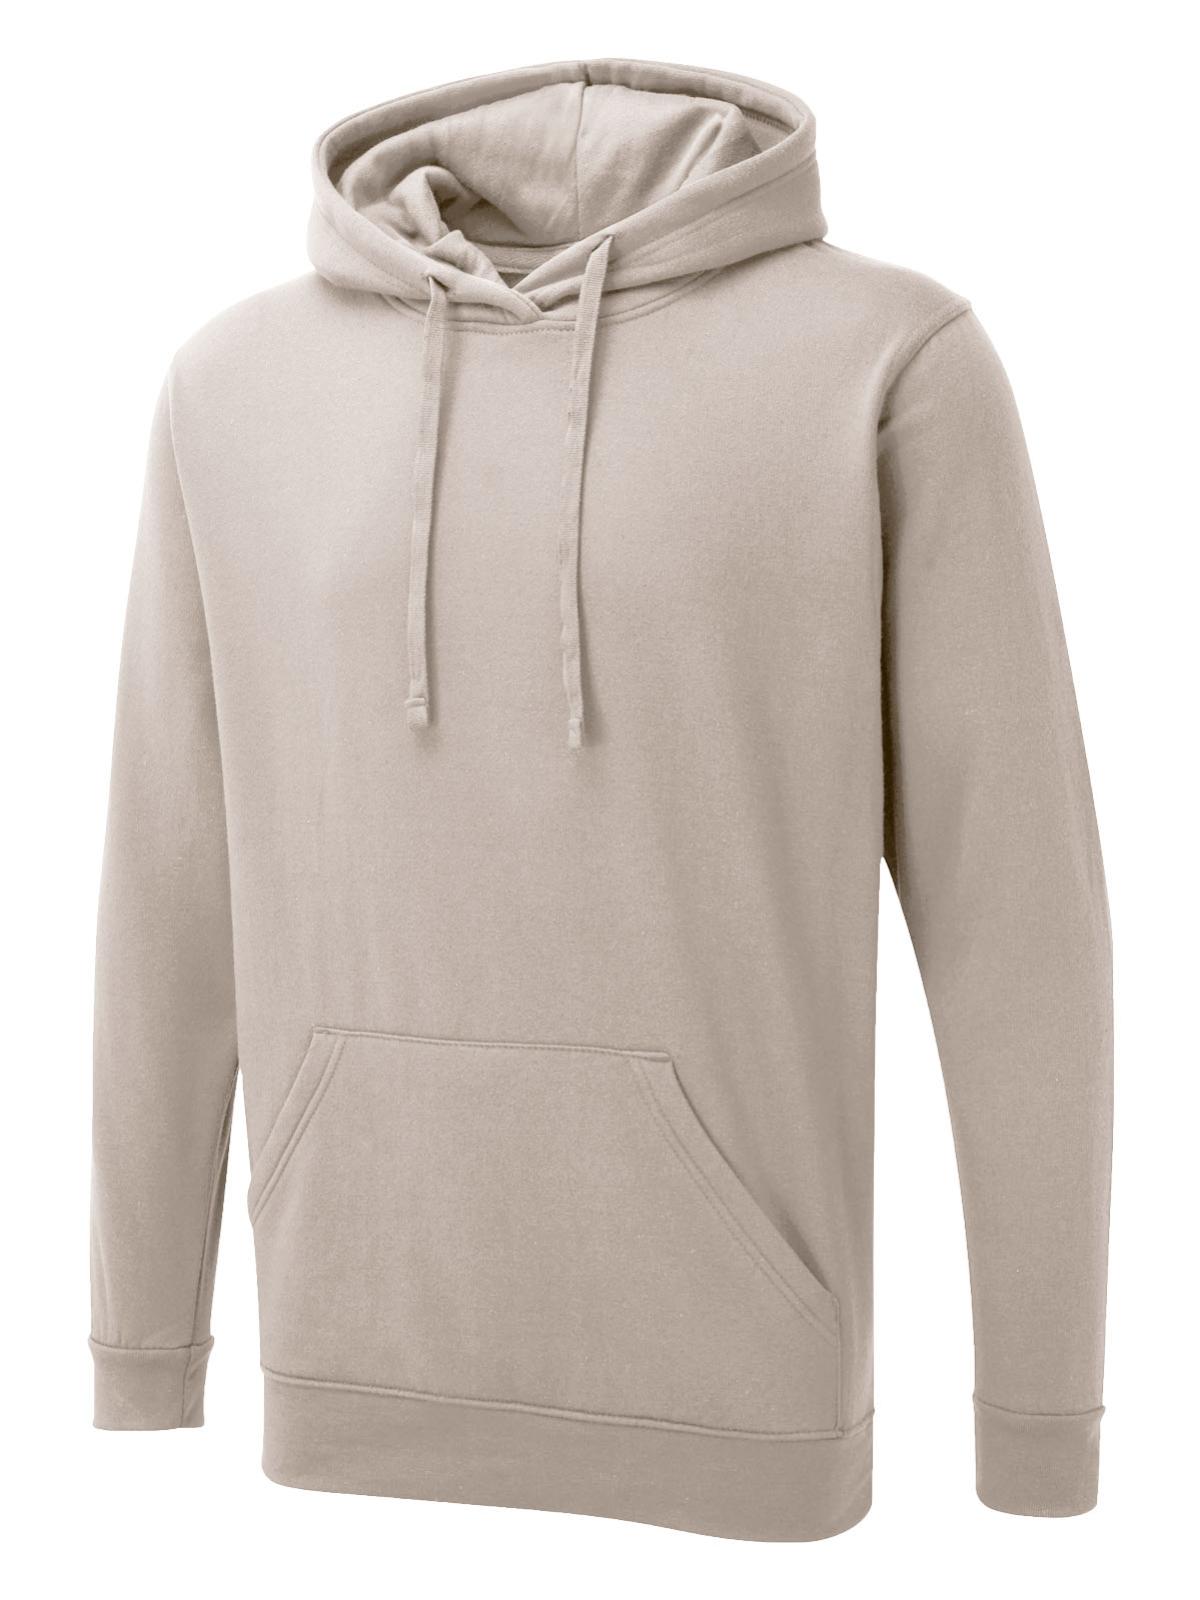 Uneek UX4 Hooded Sweatshirt - Sand | Order Uniform UK Ltd